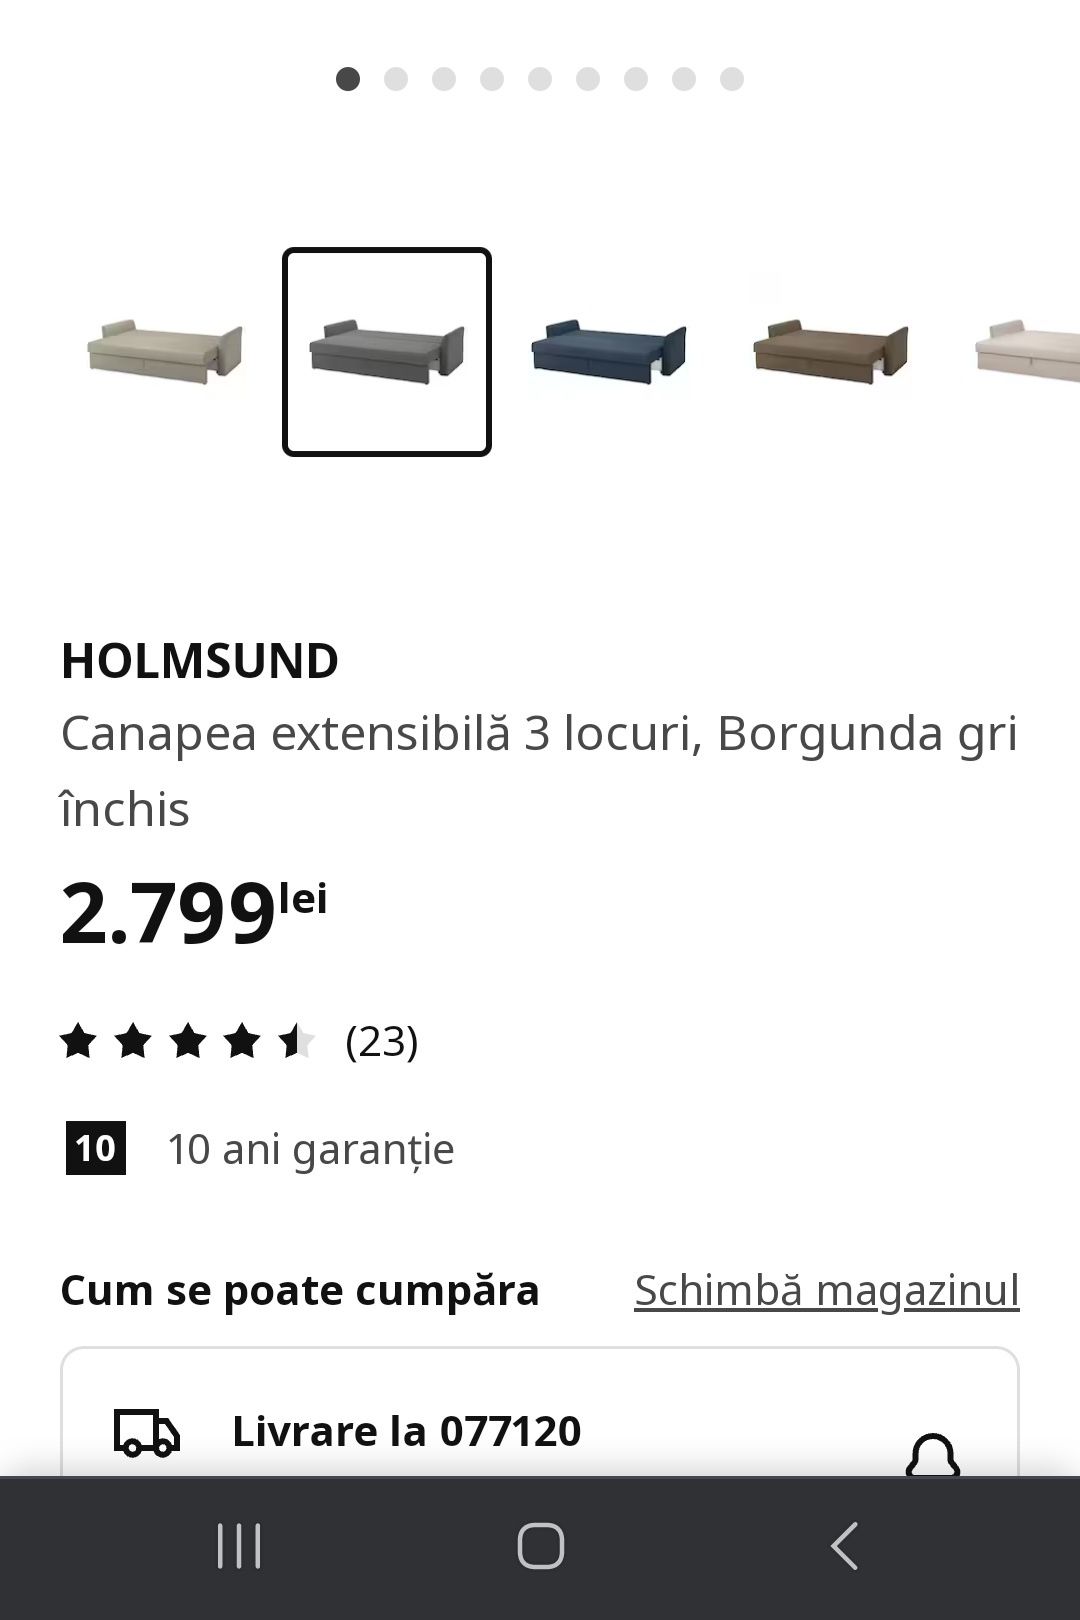 Canapea IKEA HOLMSUND extensibila, 3 locuri, stare excelenta